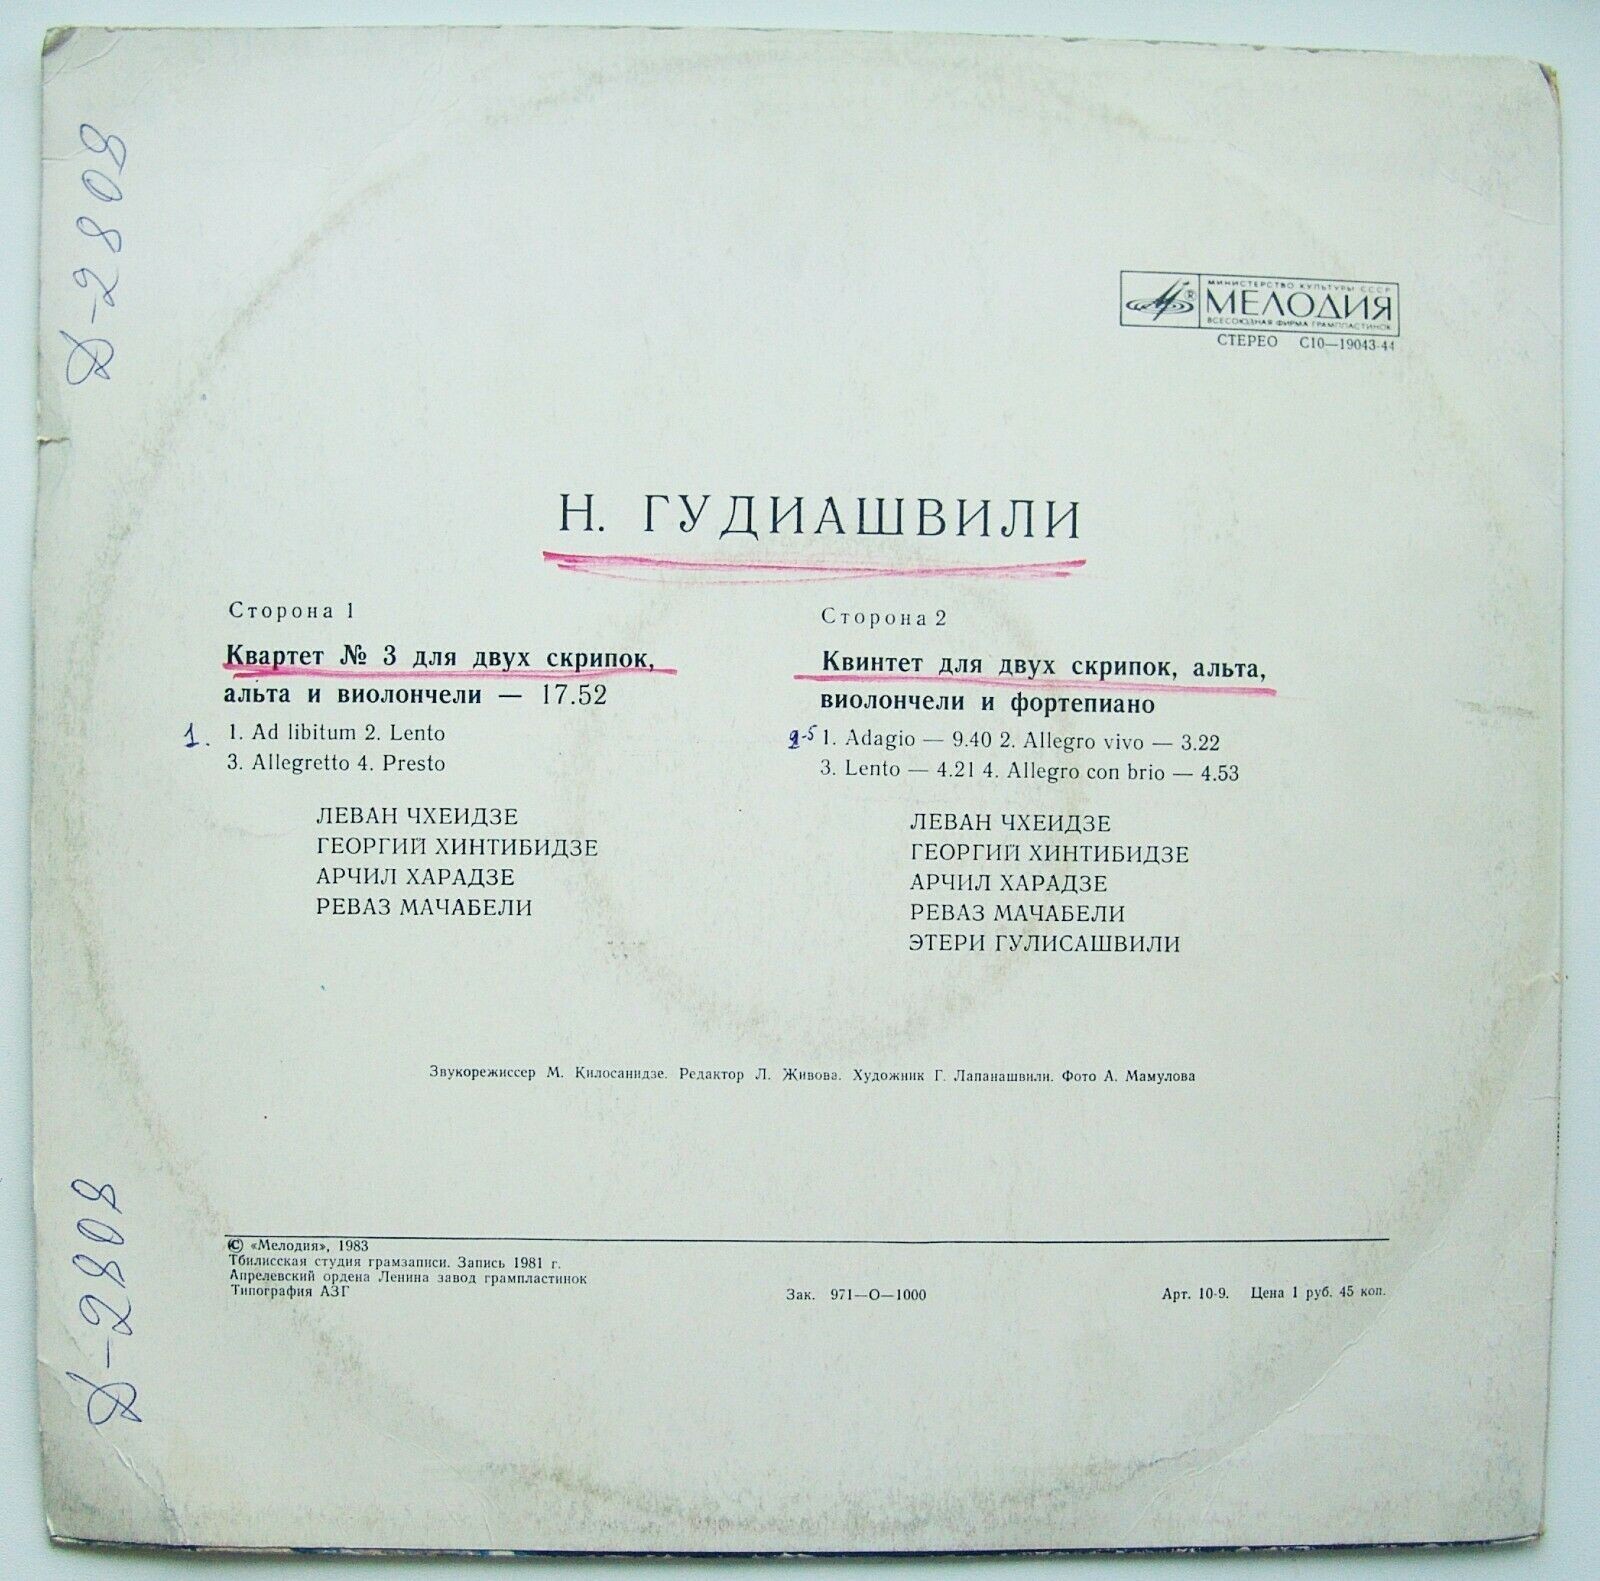 Н. ГУДИАШВИЛИ (1913). Камерная музыка